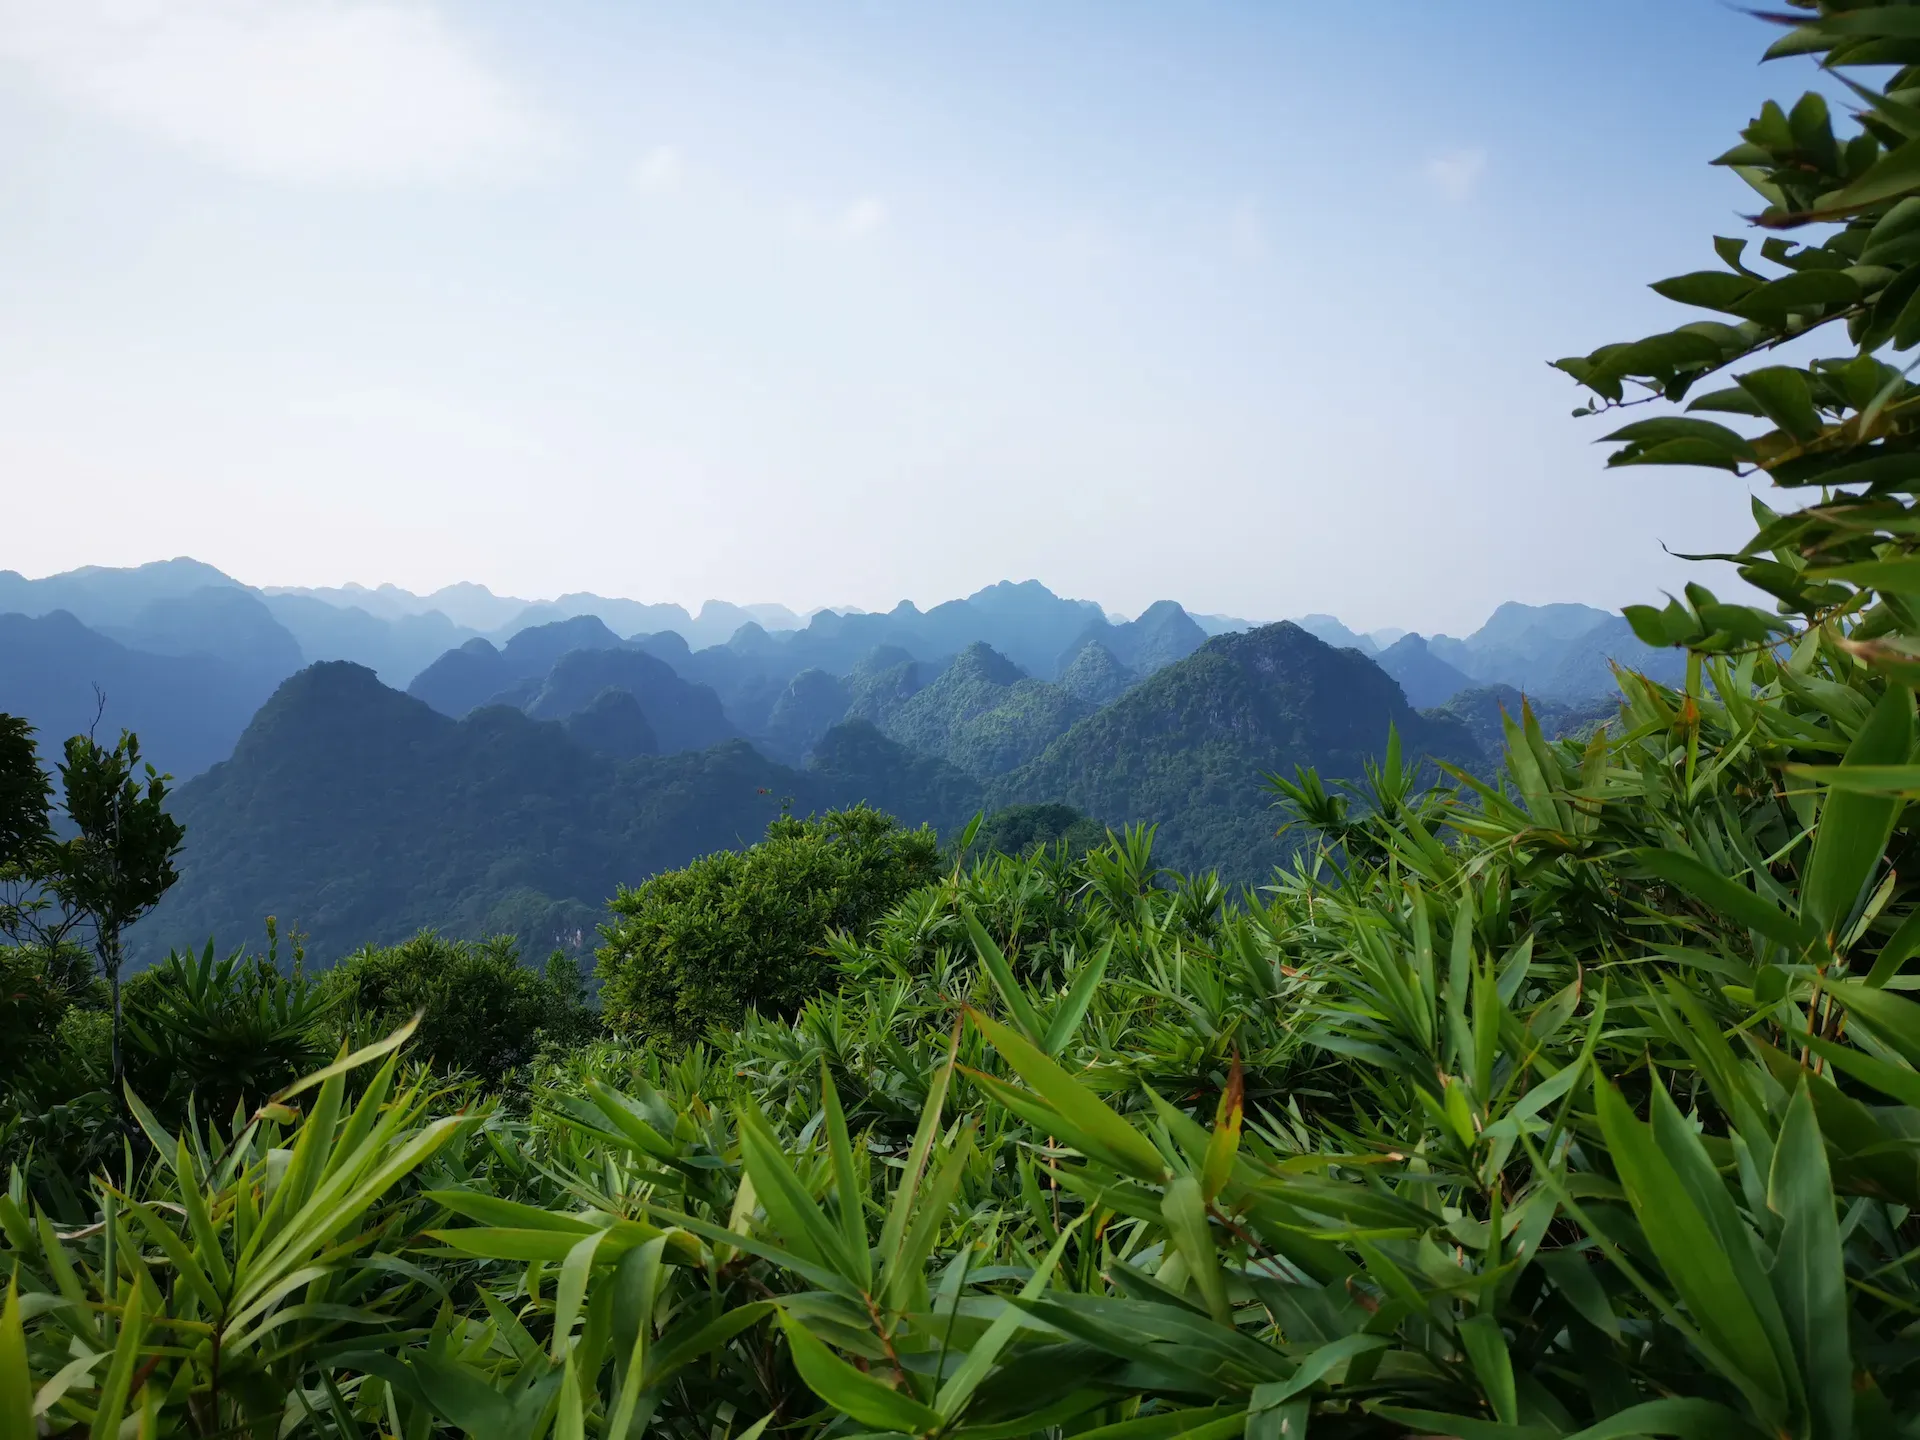 The verdant, mountainous landscape of Cat Ba Island, Vietnam